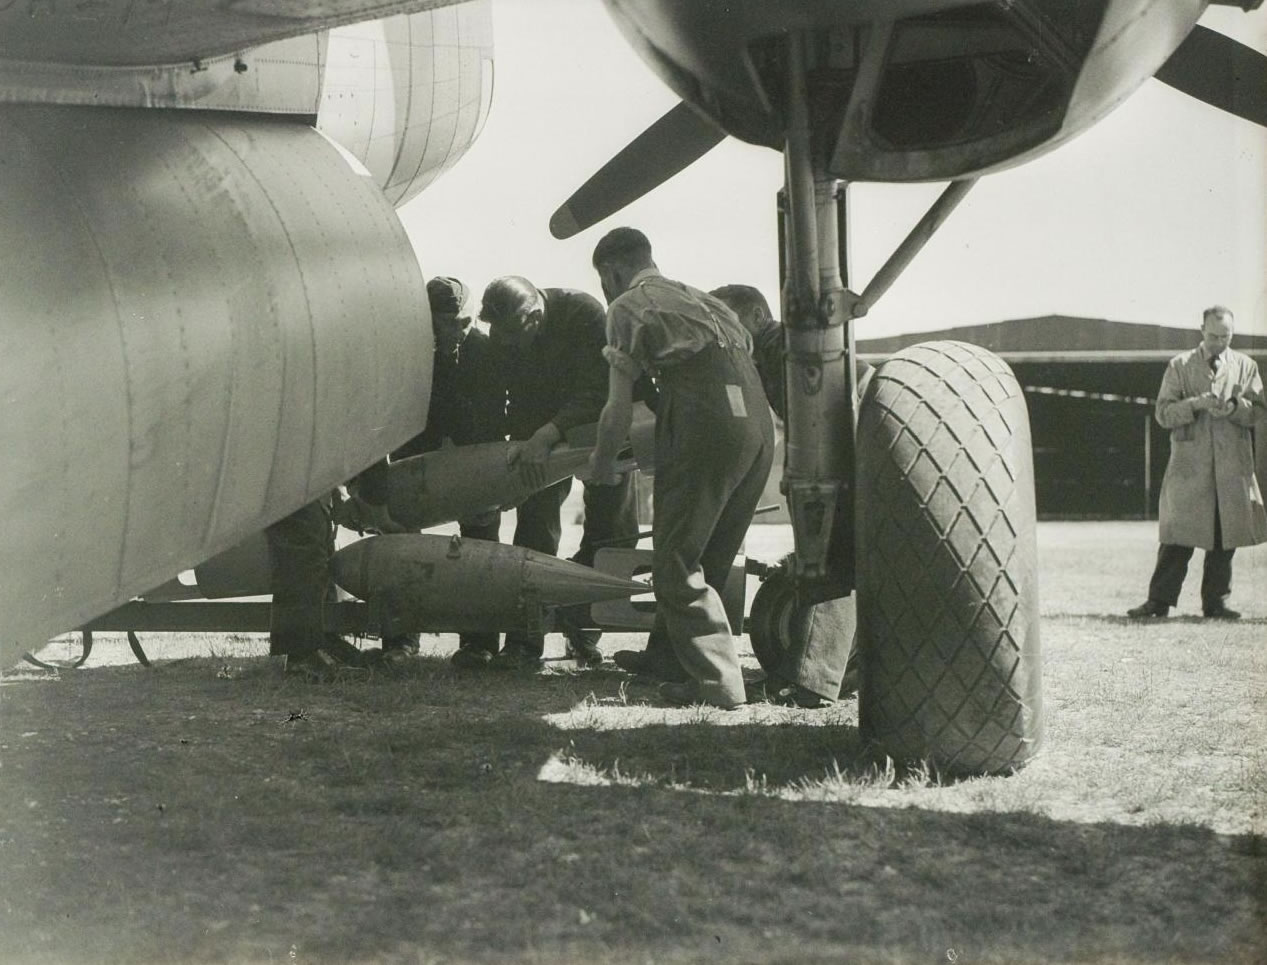 Loading bombs during World War II